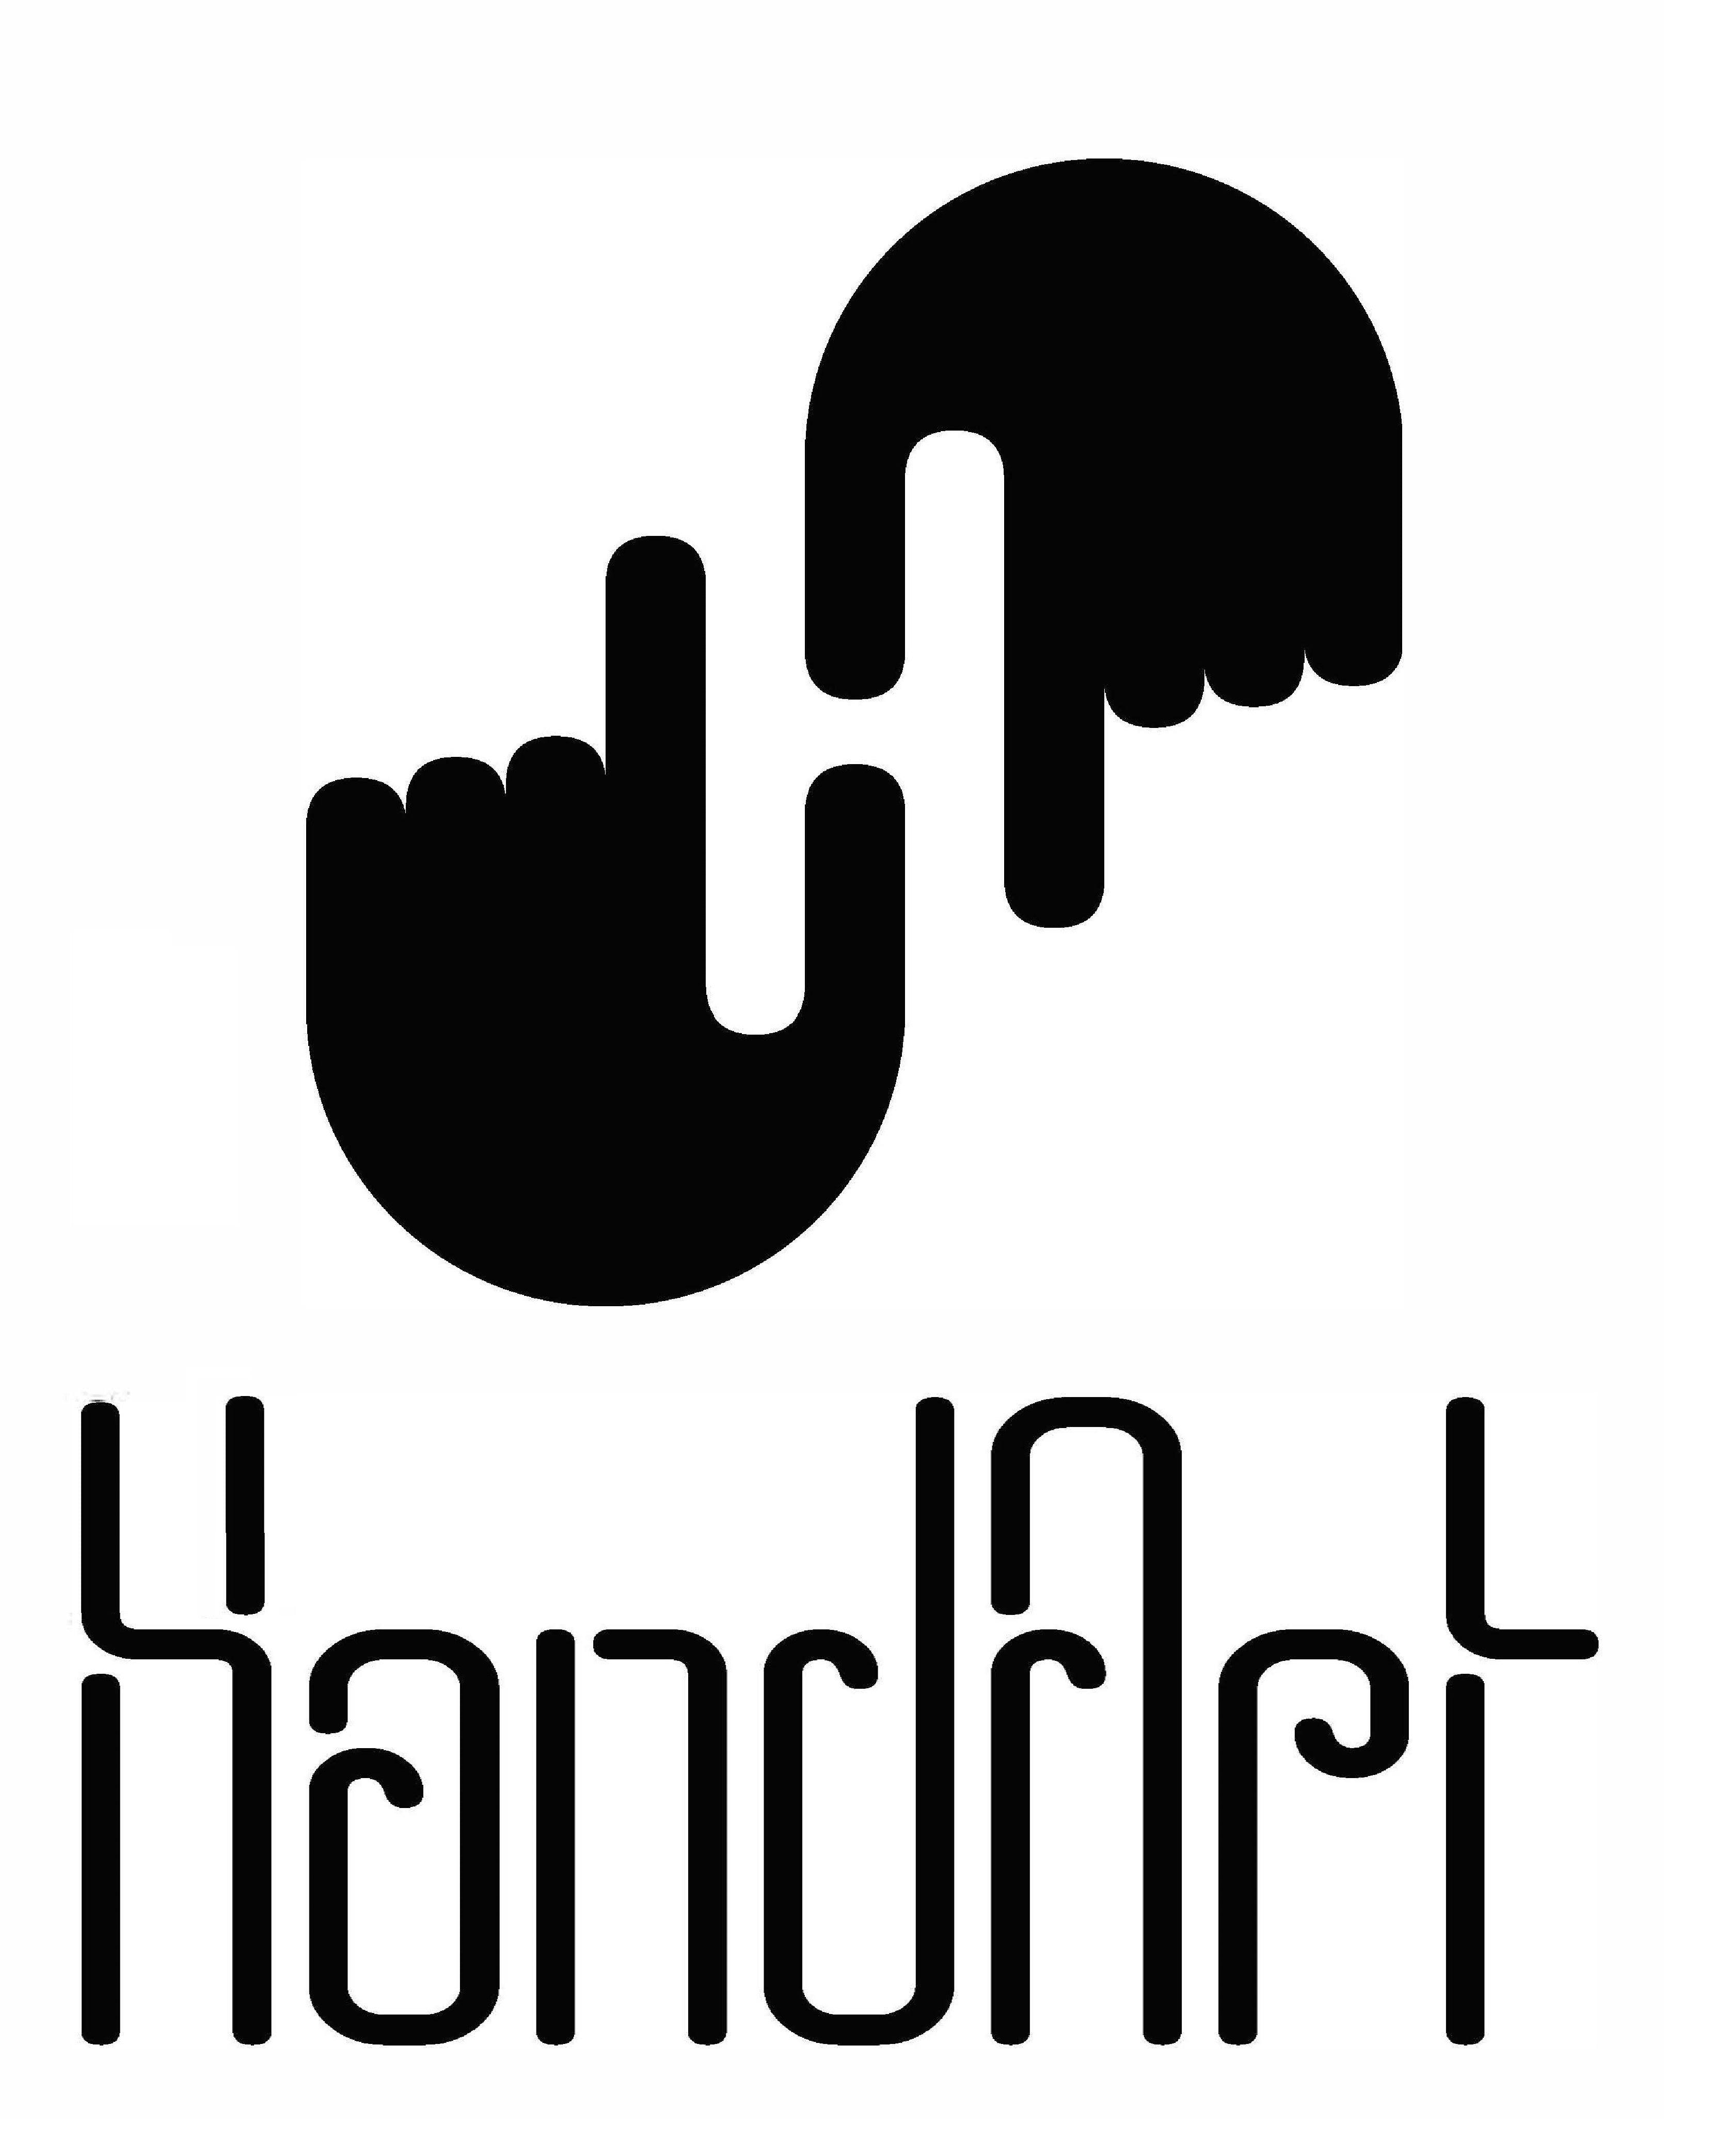 HandArt